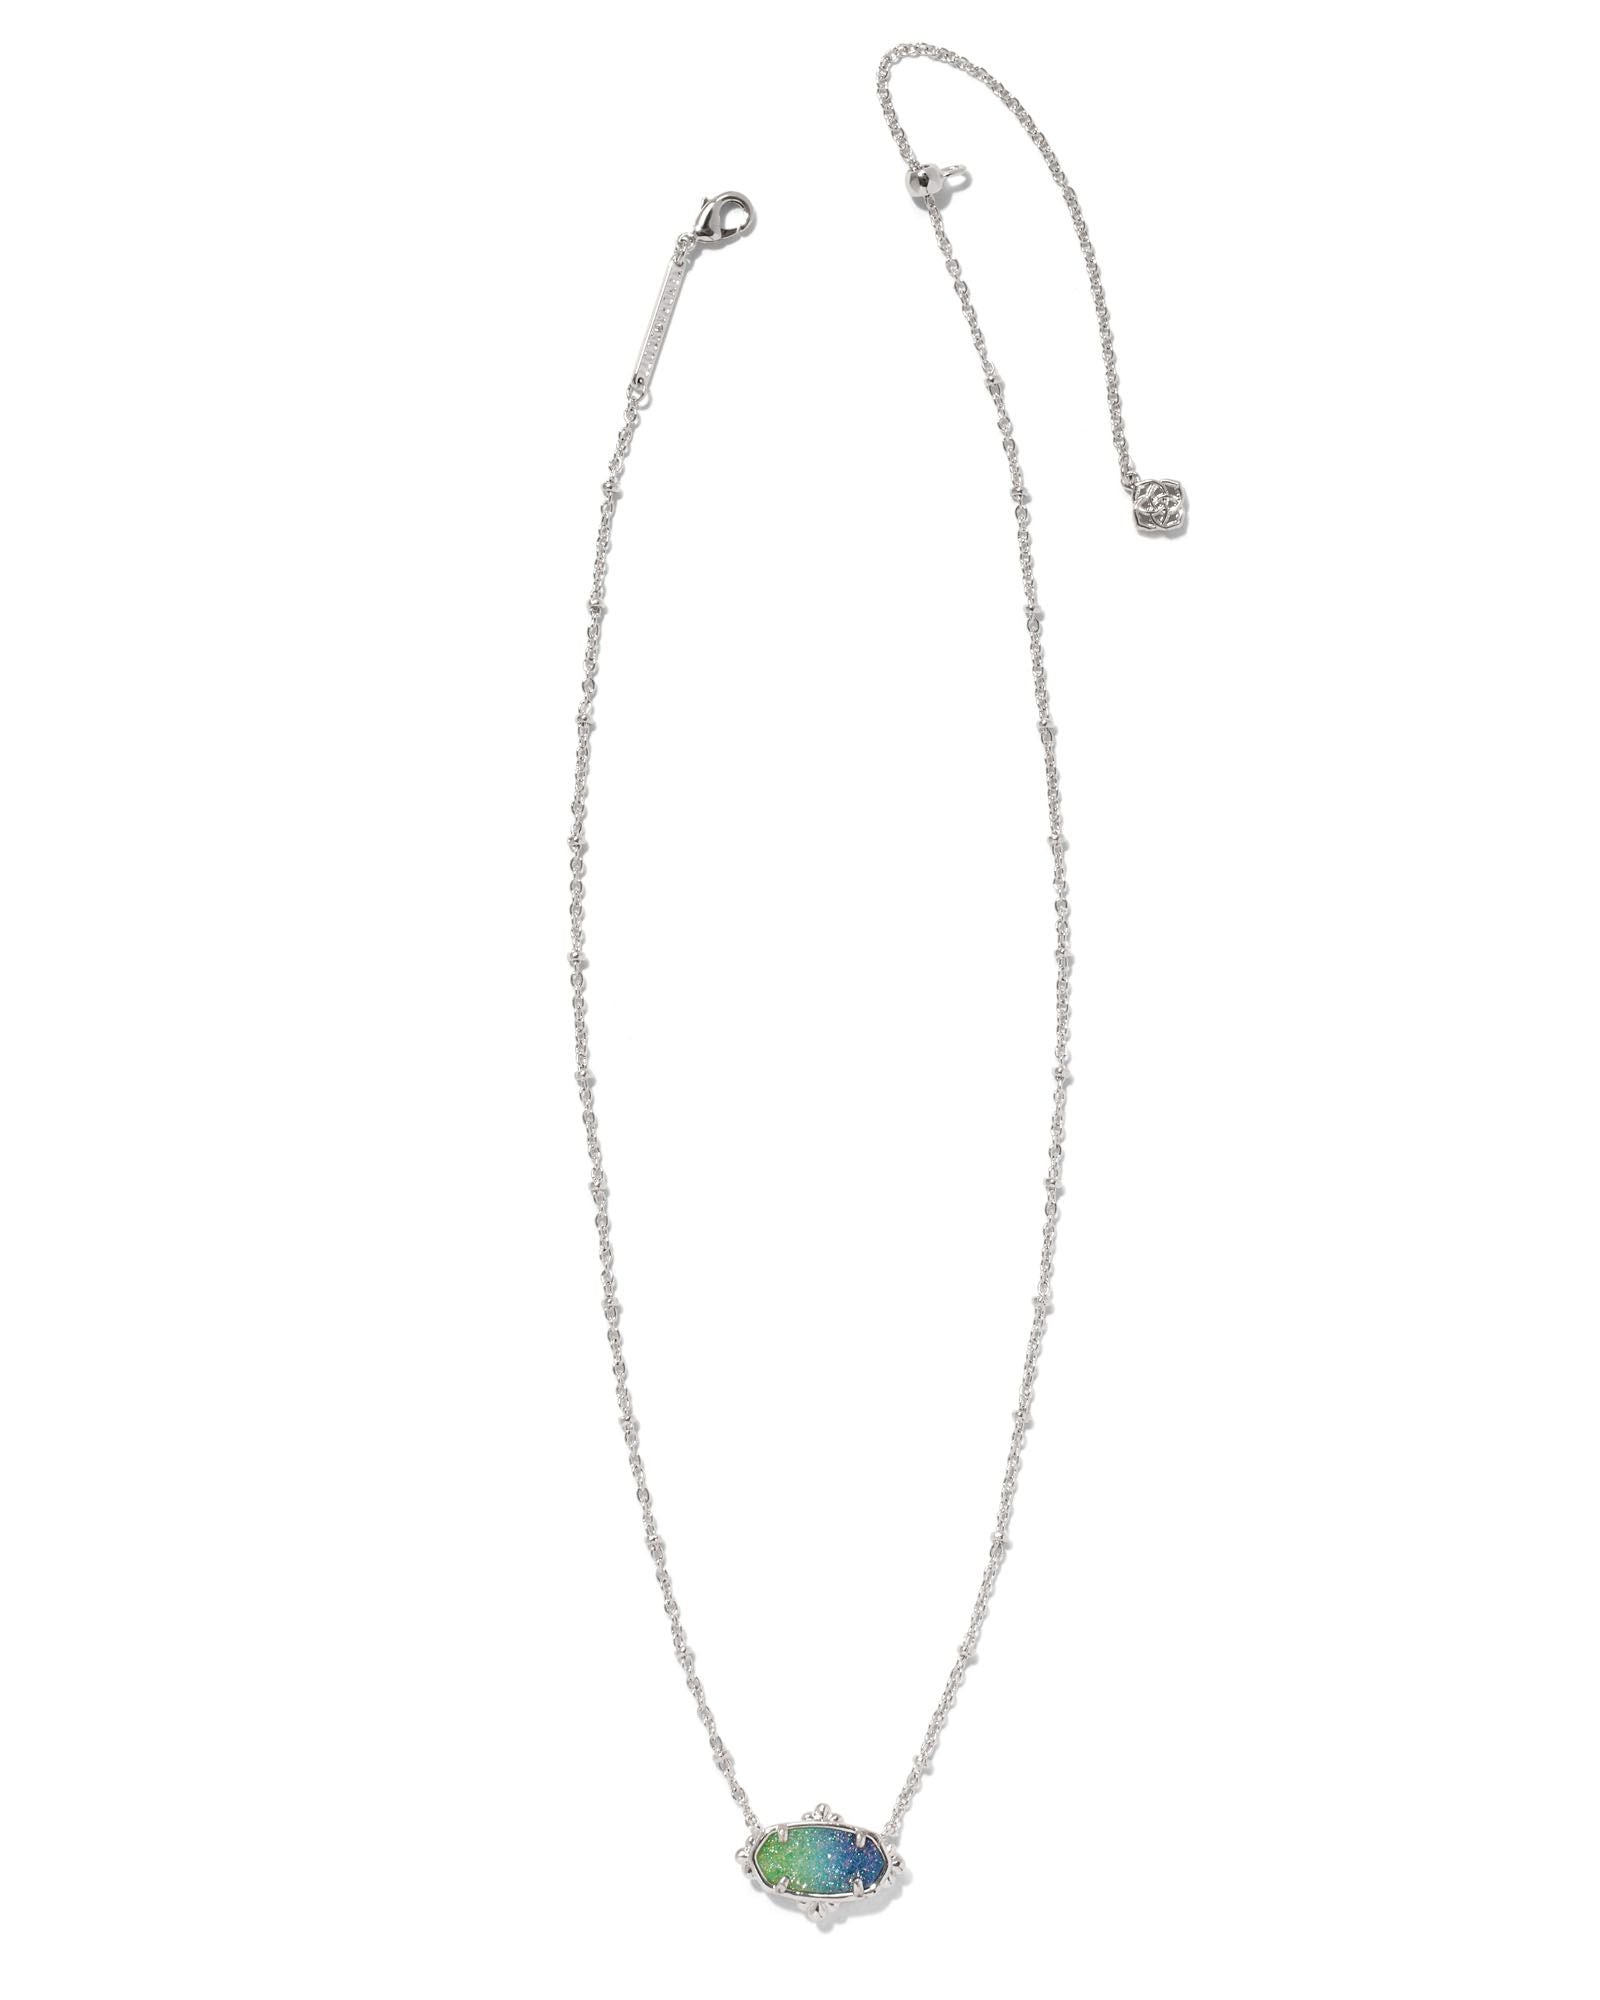 Sale Elisa Petal Framed Necklace Silver Aqua Ombre Drusy